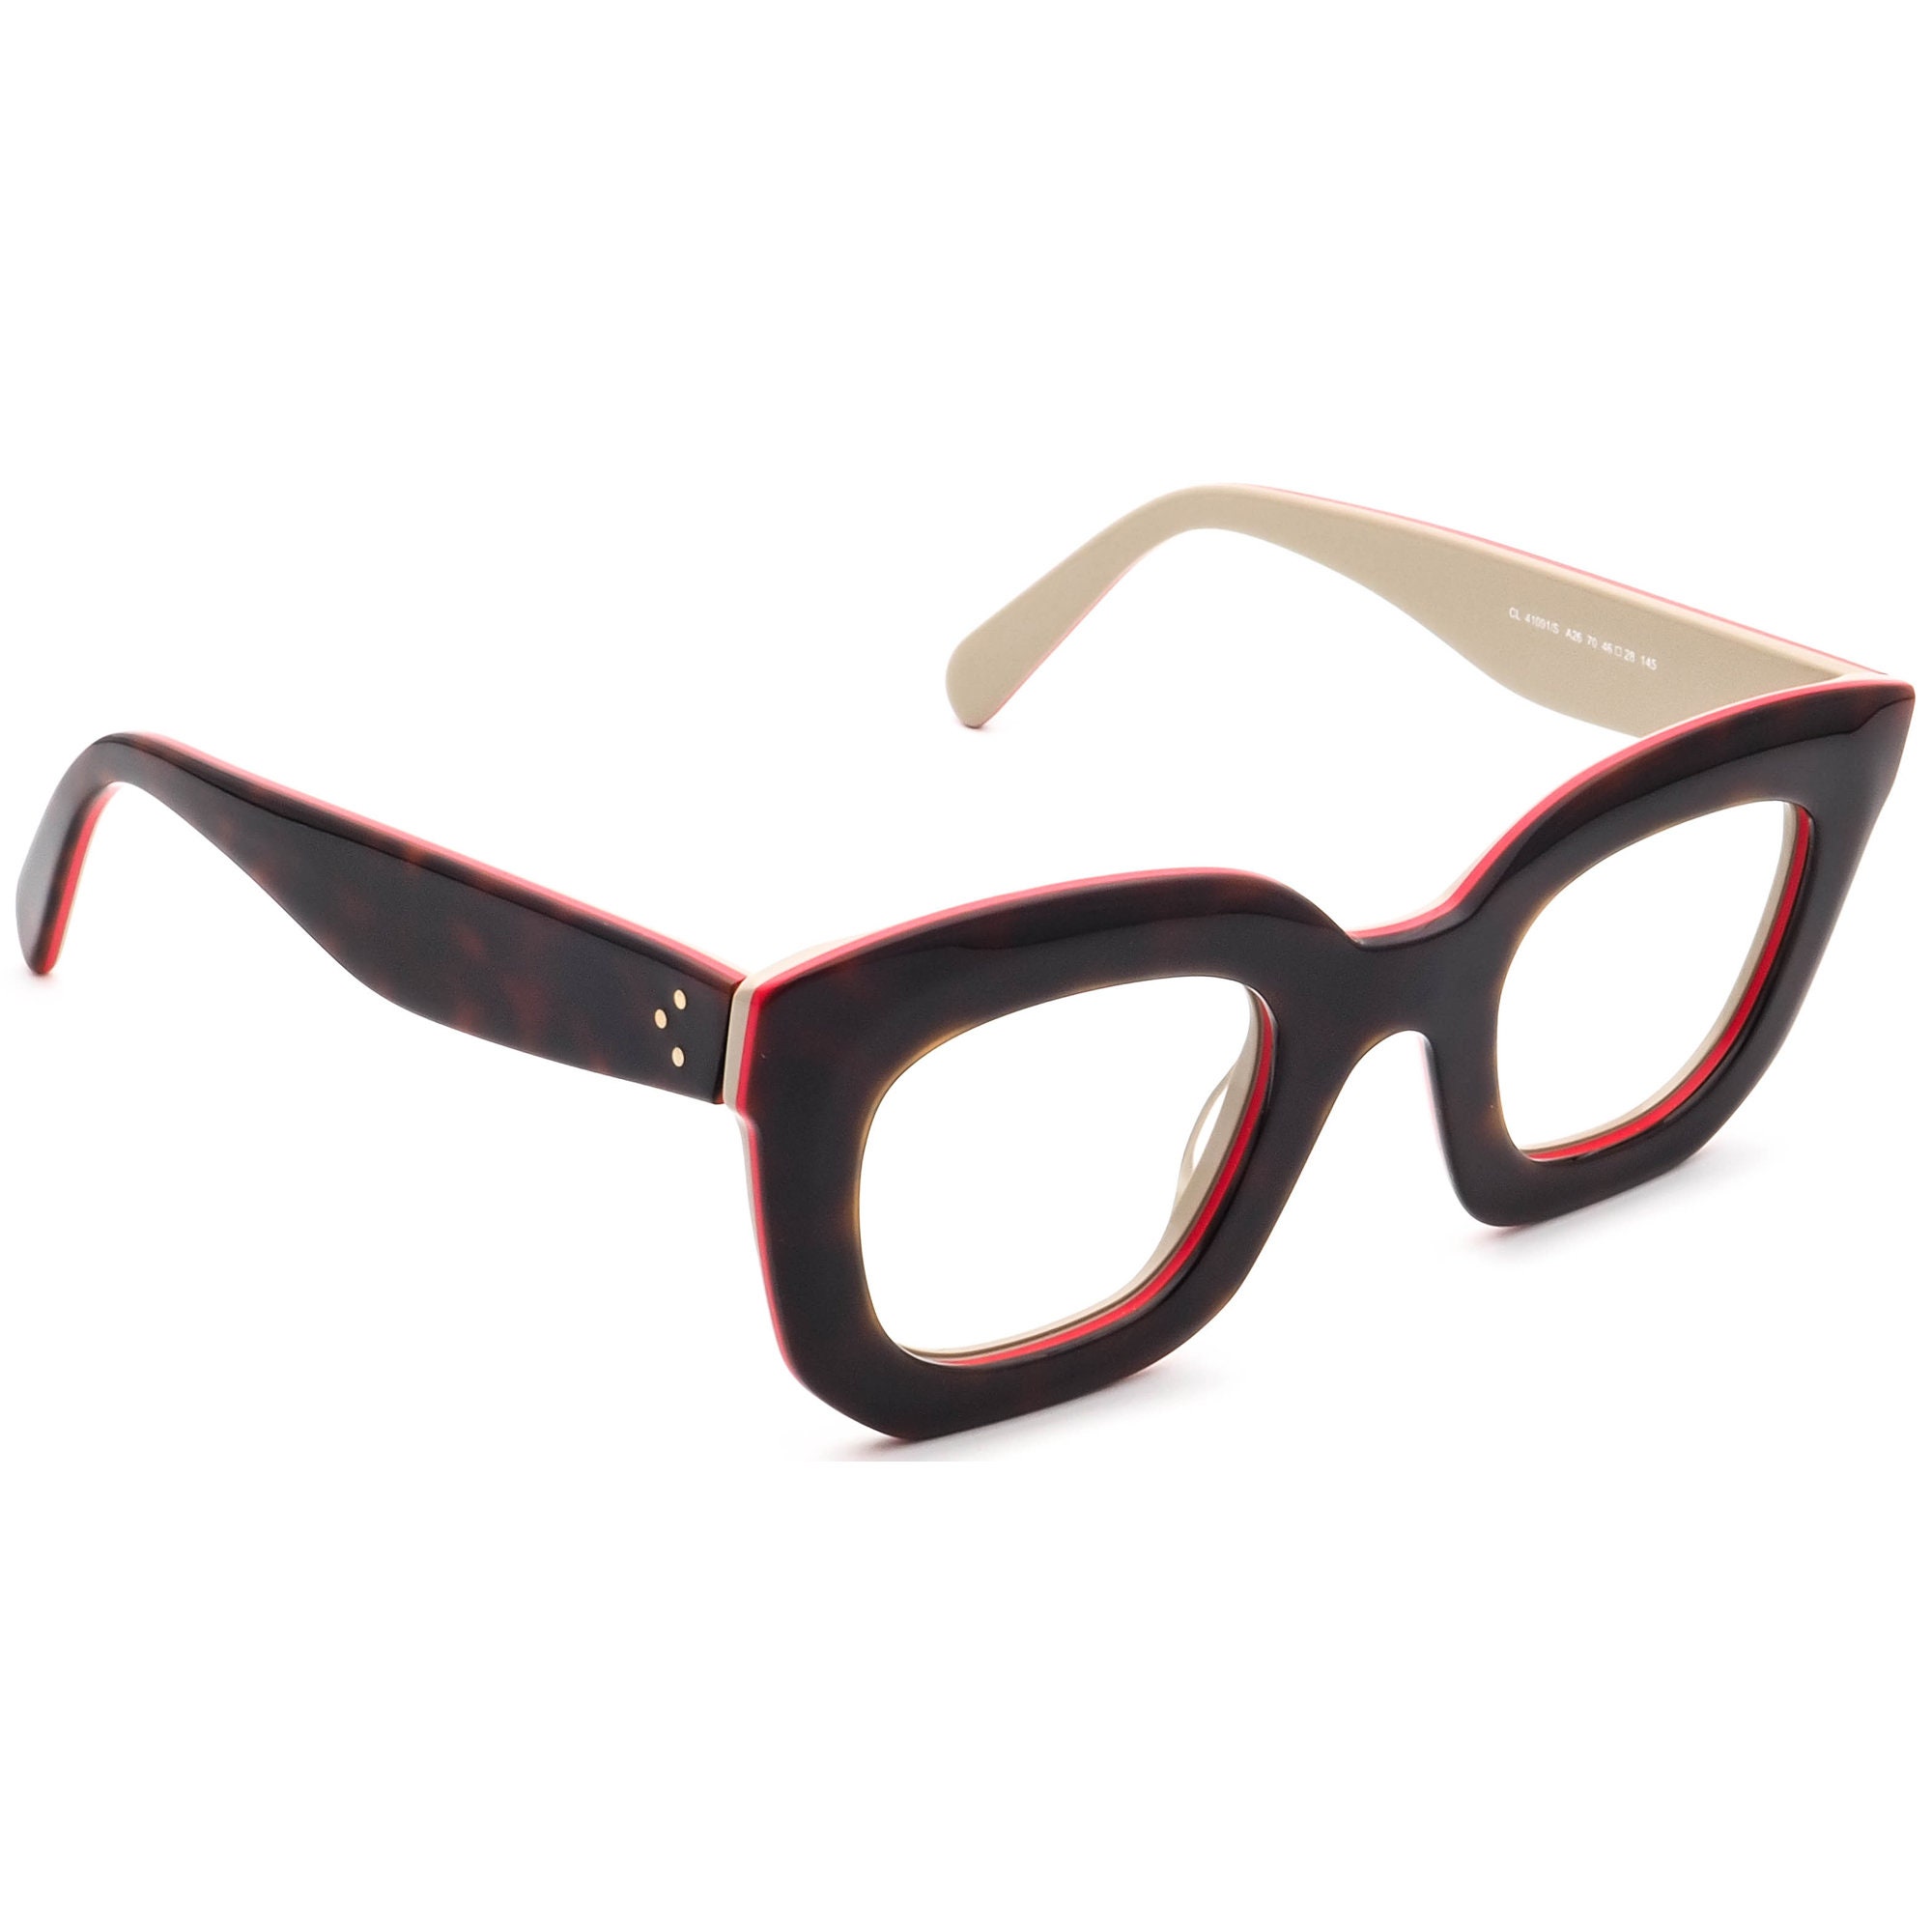 Celine Sunglasses Frame CL A26 70 Red Havana/gray Etsy